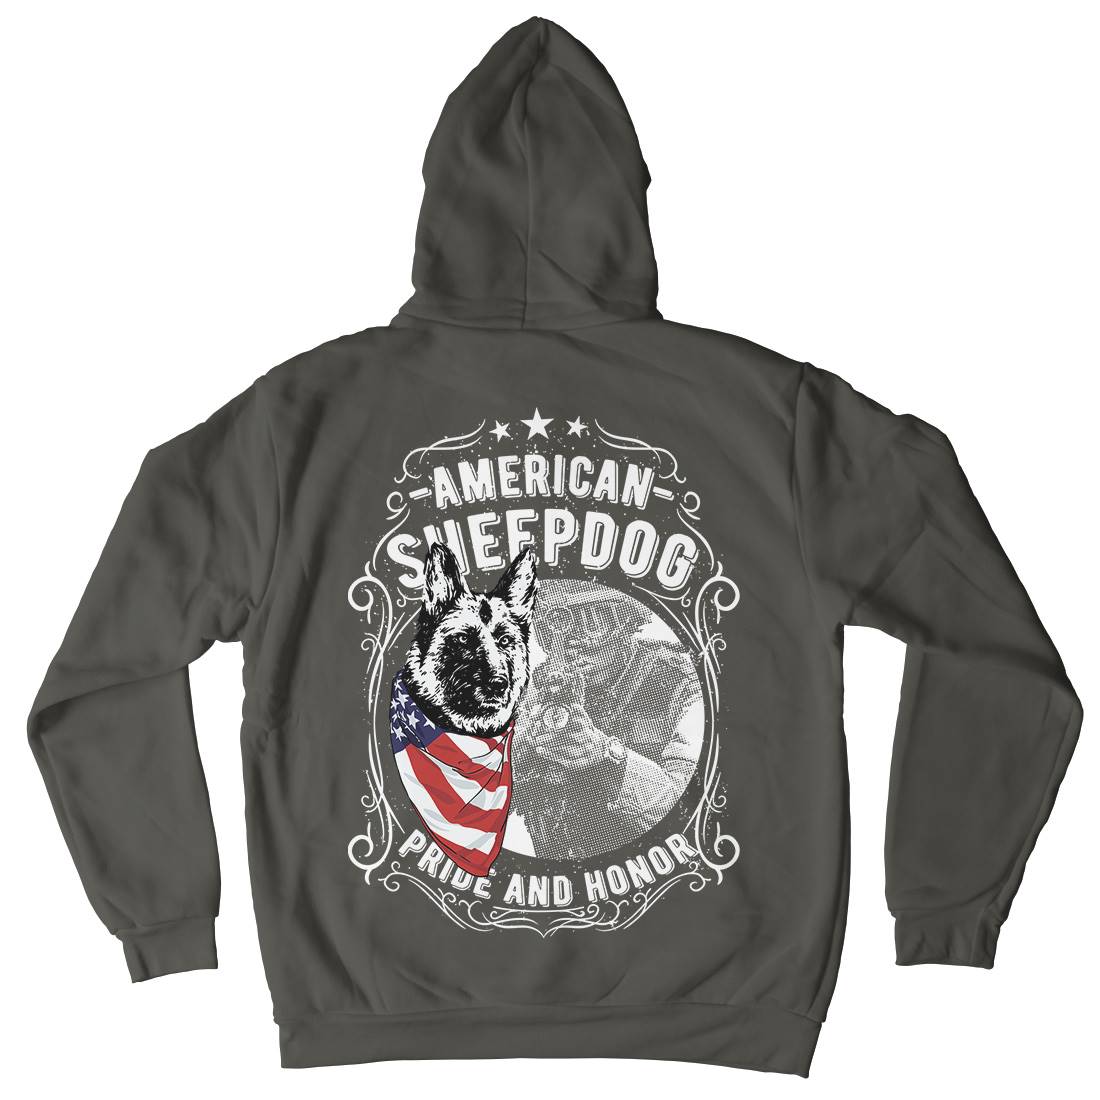 Sheepdog Mens Hoodie With Pocket American C904